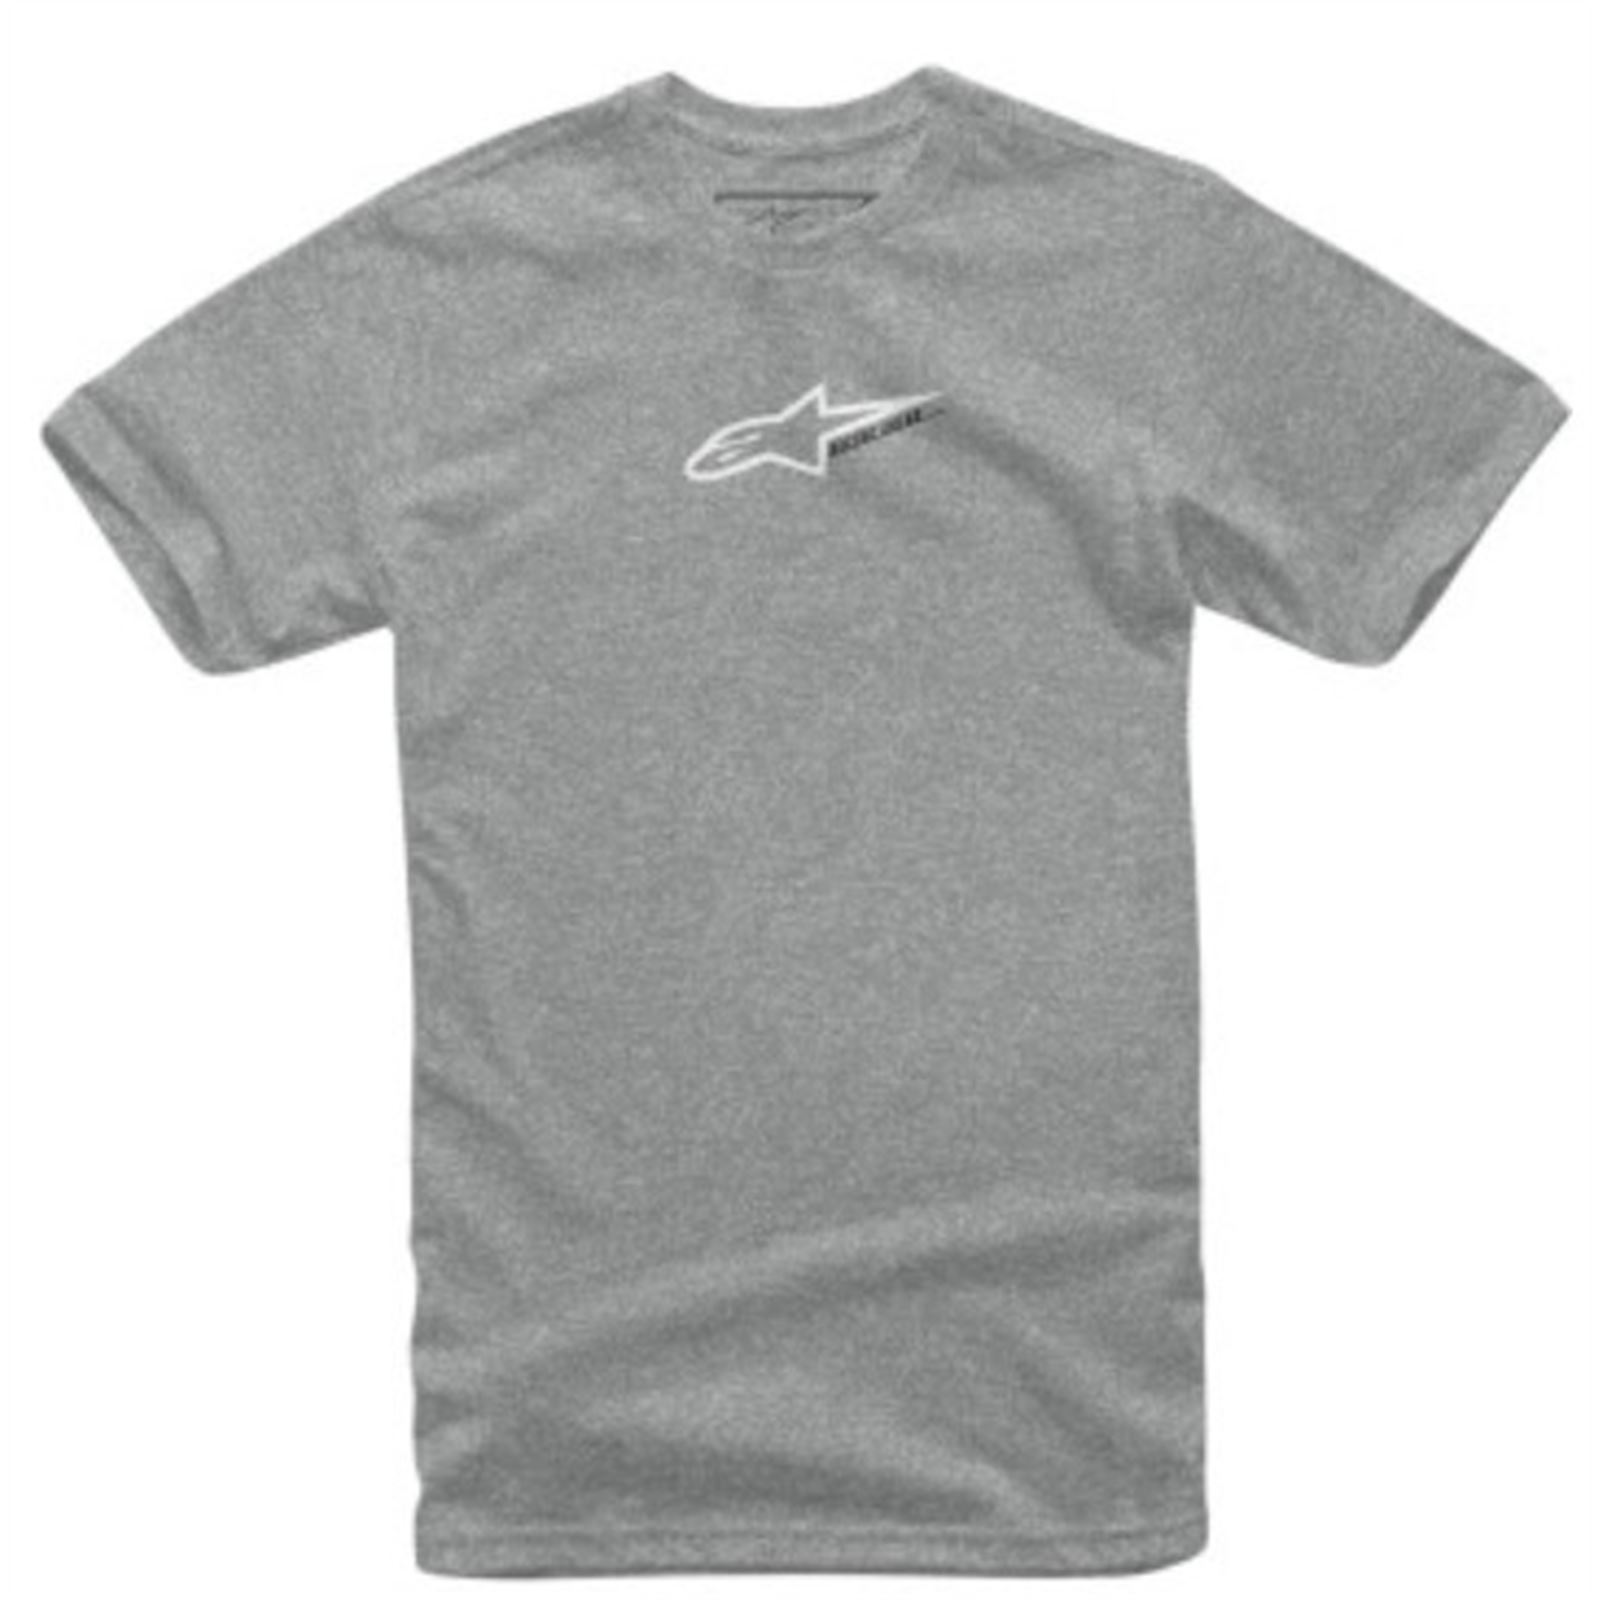 Alpinestars Race Mod T-Shirt - Gray/White - 2X-Large